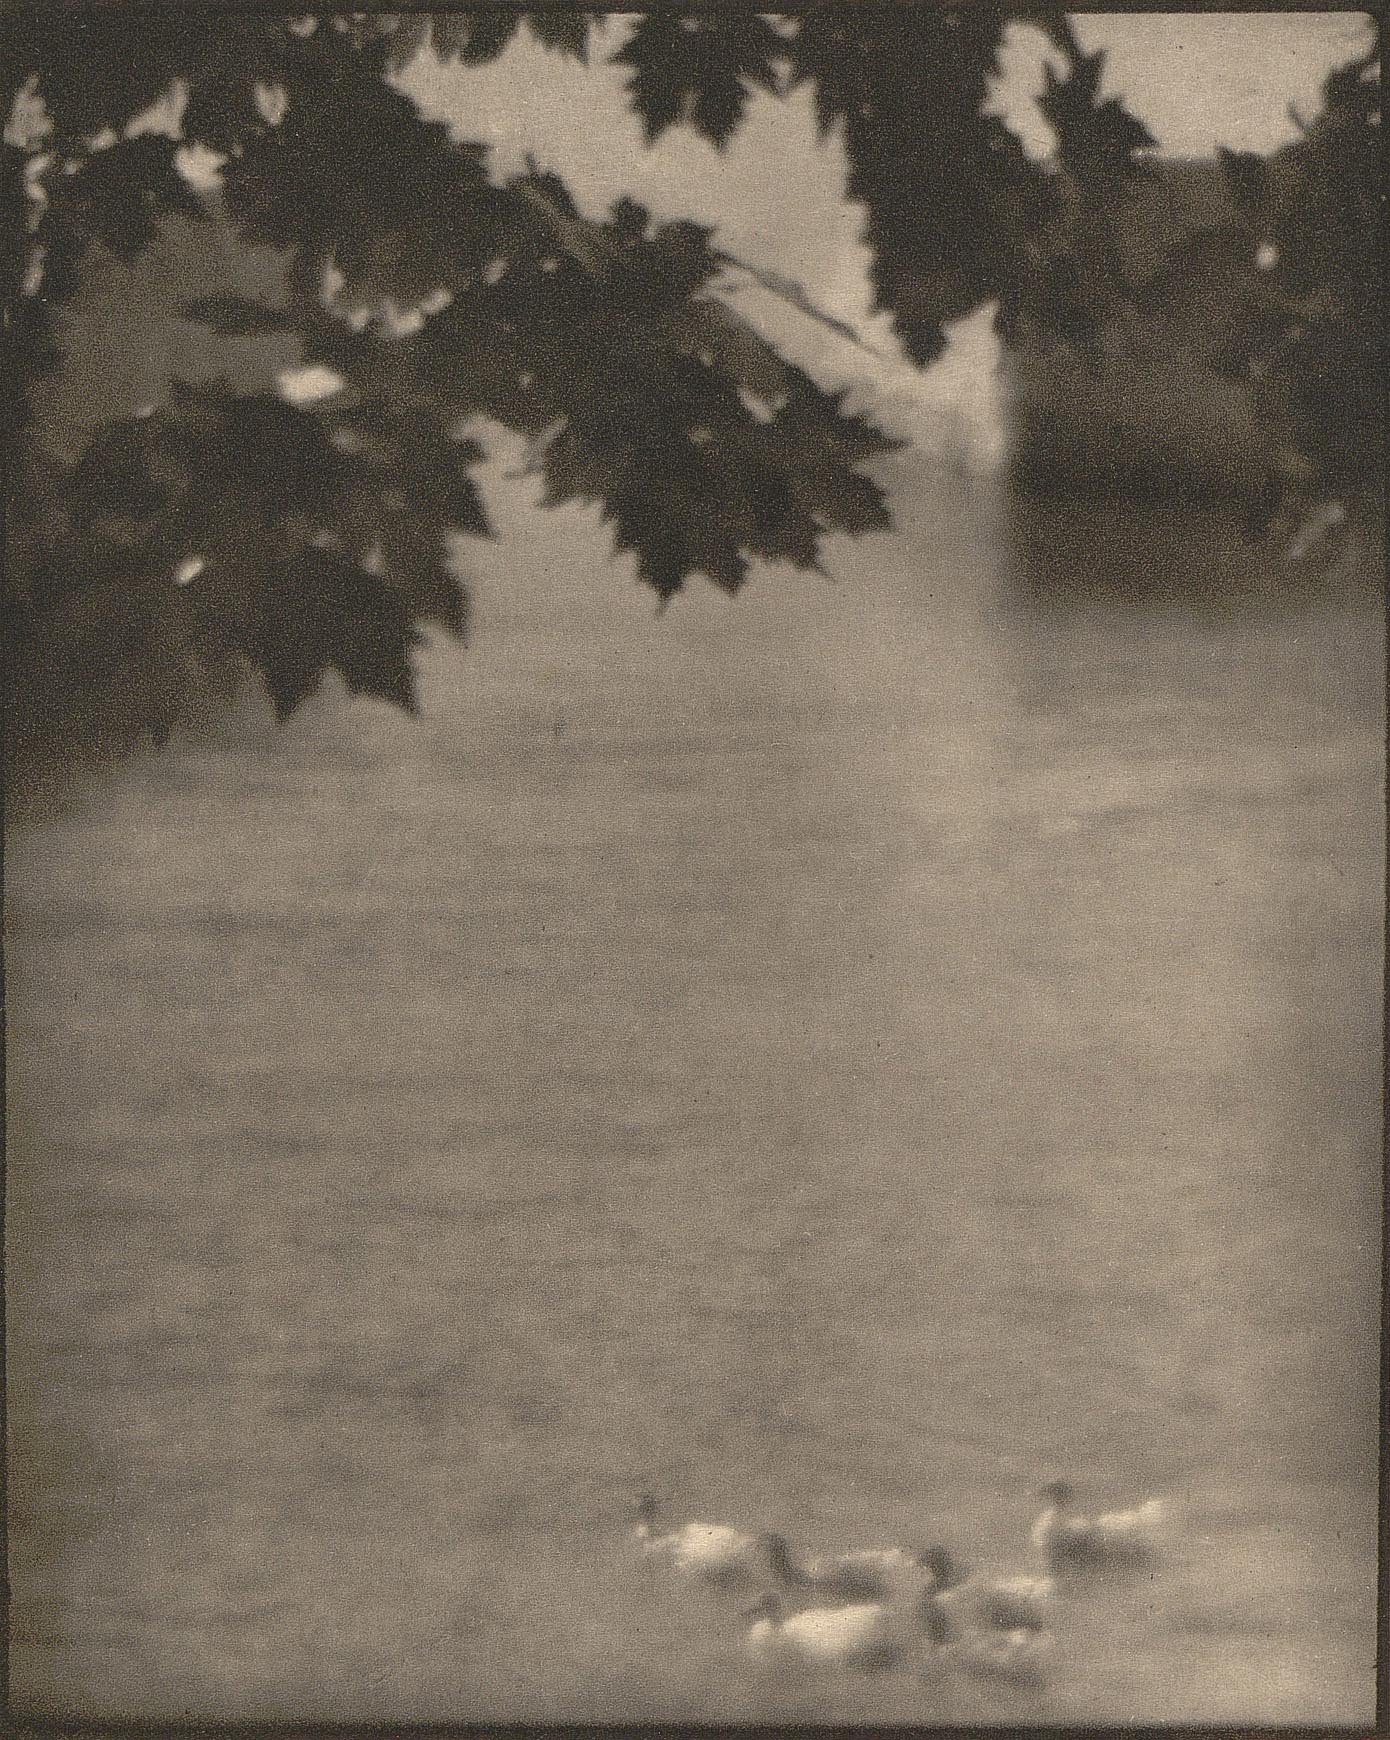 Karl Struss (1886-1981) :: Ducks on Lake Como. Photogravure published in Camera Work nº 38, 1912. | src Modernist Journals Project